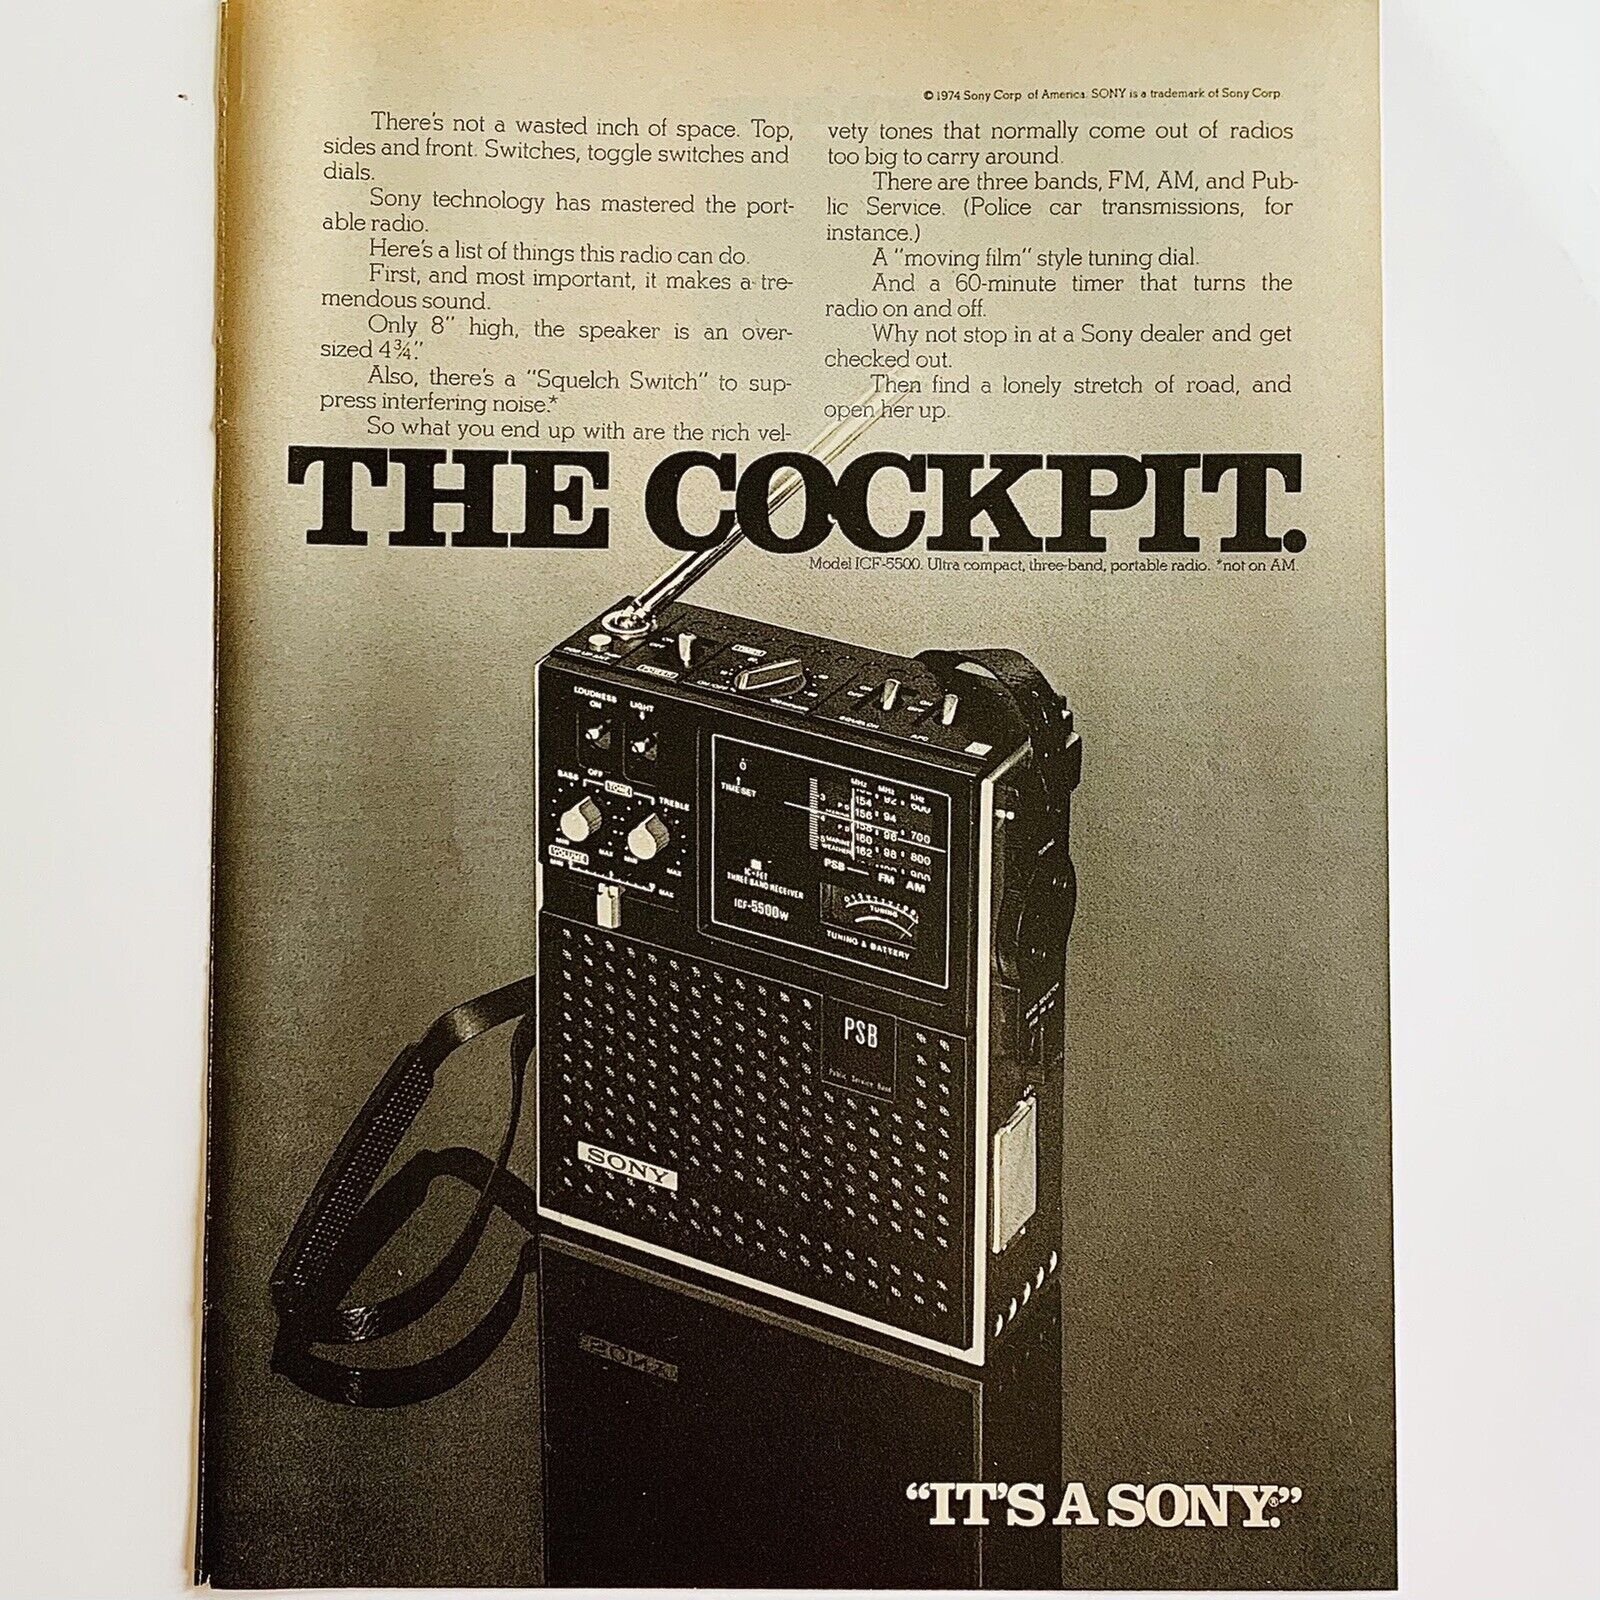 Vintage 1970's Sony ICF-5500 Cockpit Portable Three Band Radio Magazine Print Ad